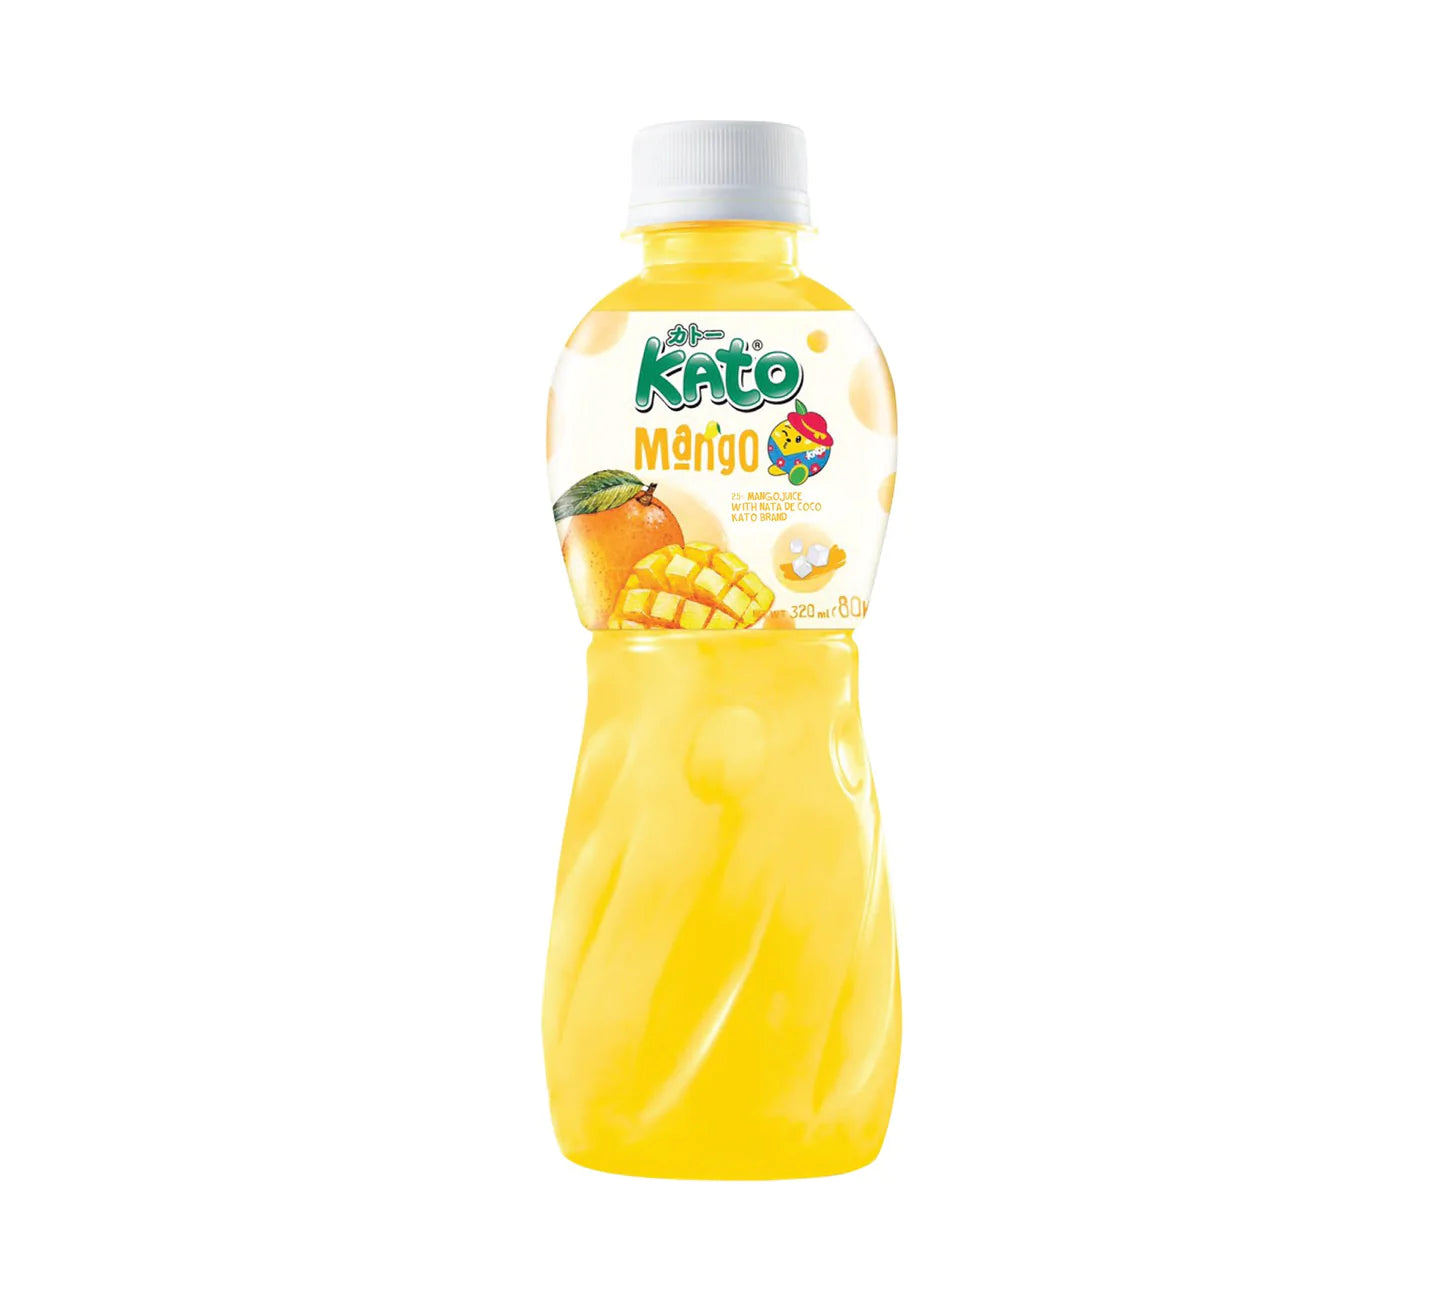 Kato Mango Juice With Nata De Coco 320ml - PET Bottle